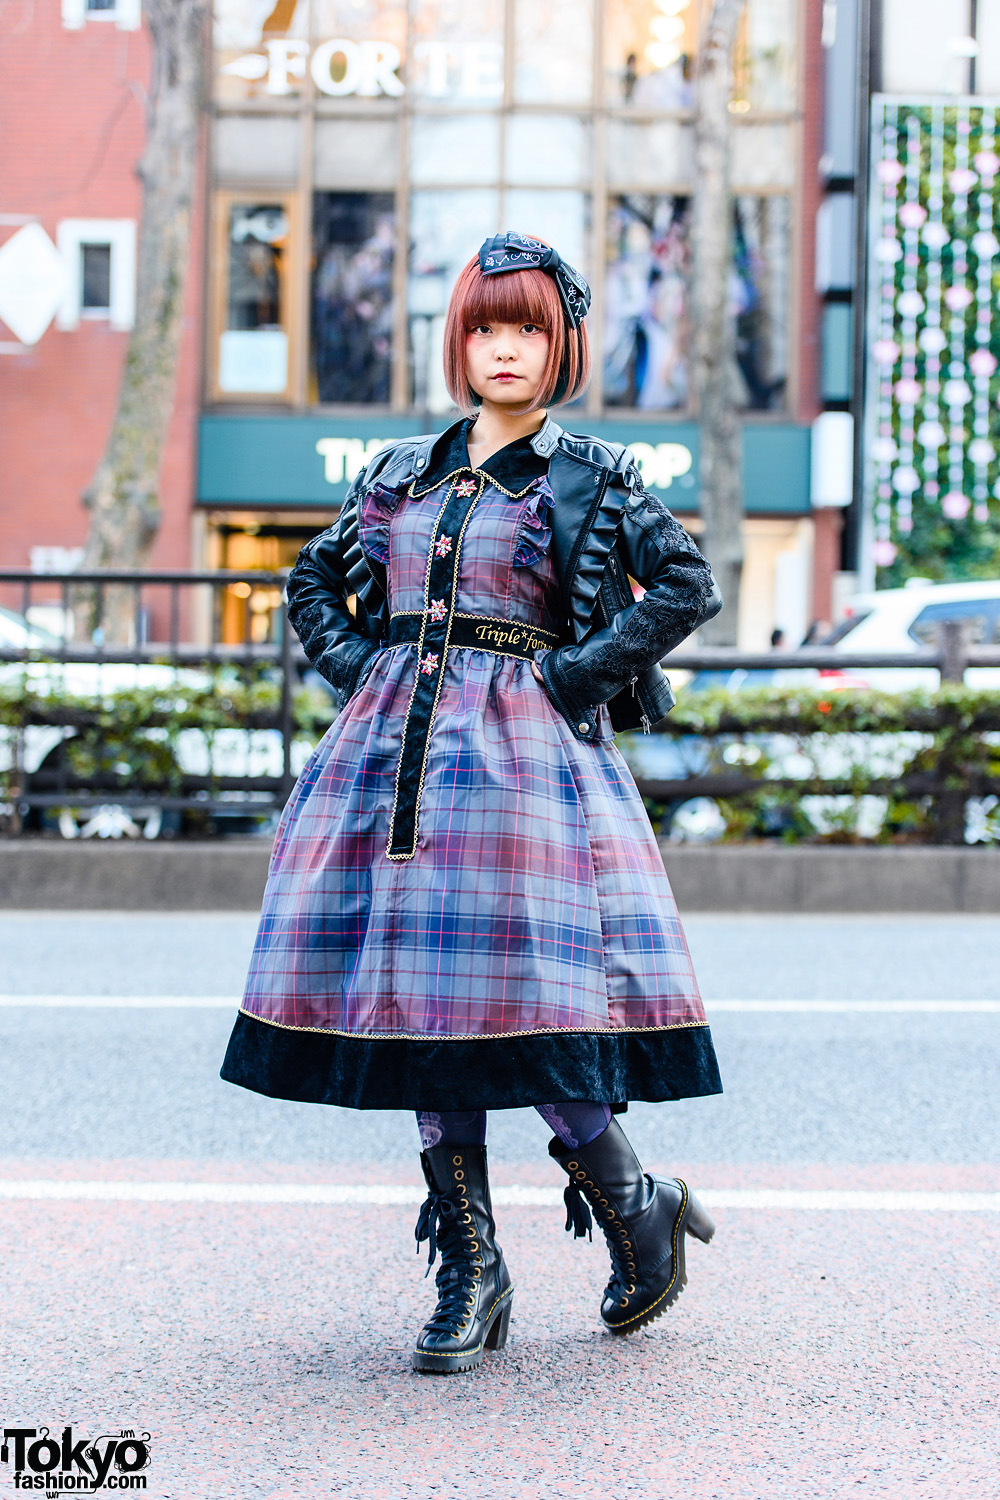 The Paris Review - Lolita Fashion: Japanese Street Fashion and